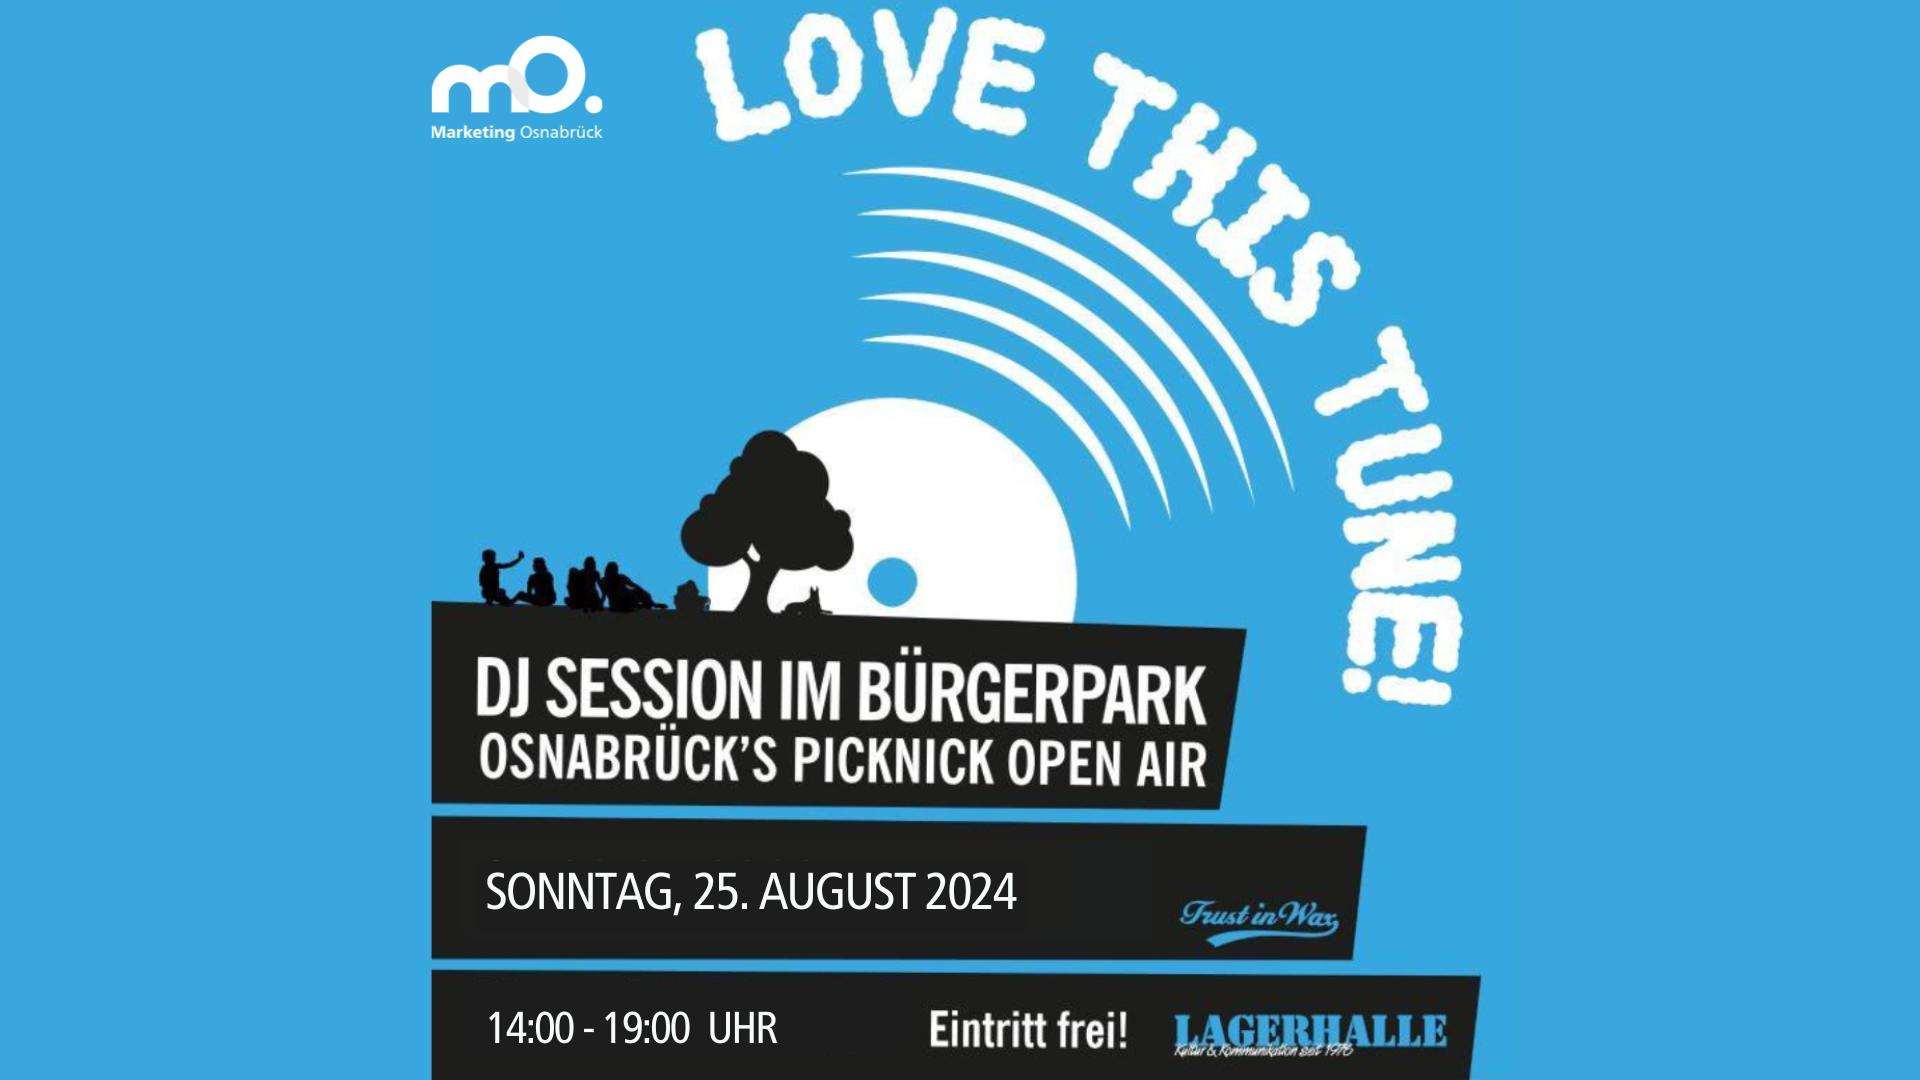 Love This Tune! DJ Session im Bürgerpark